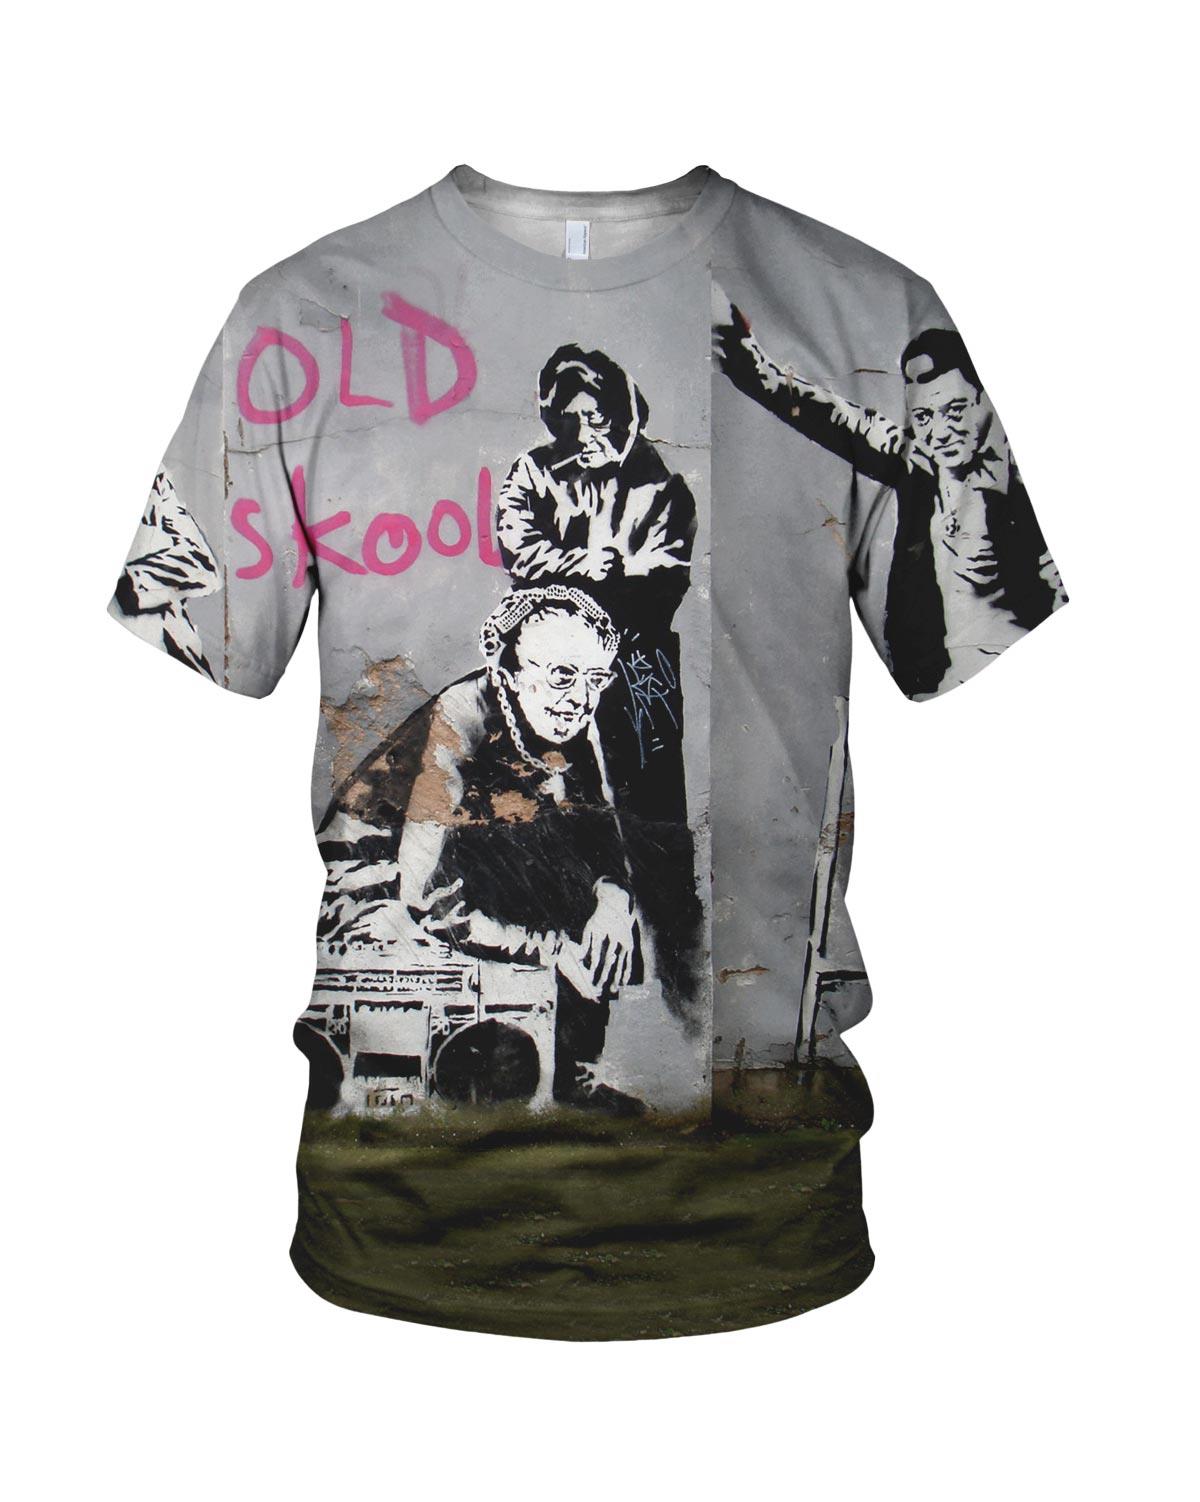 Banksy Old Skool Street Art Men's Fashion T Shirt, White, XXL